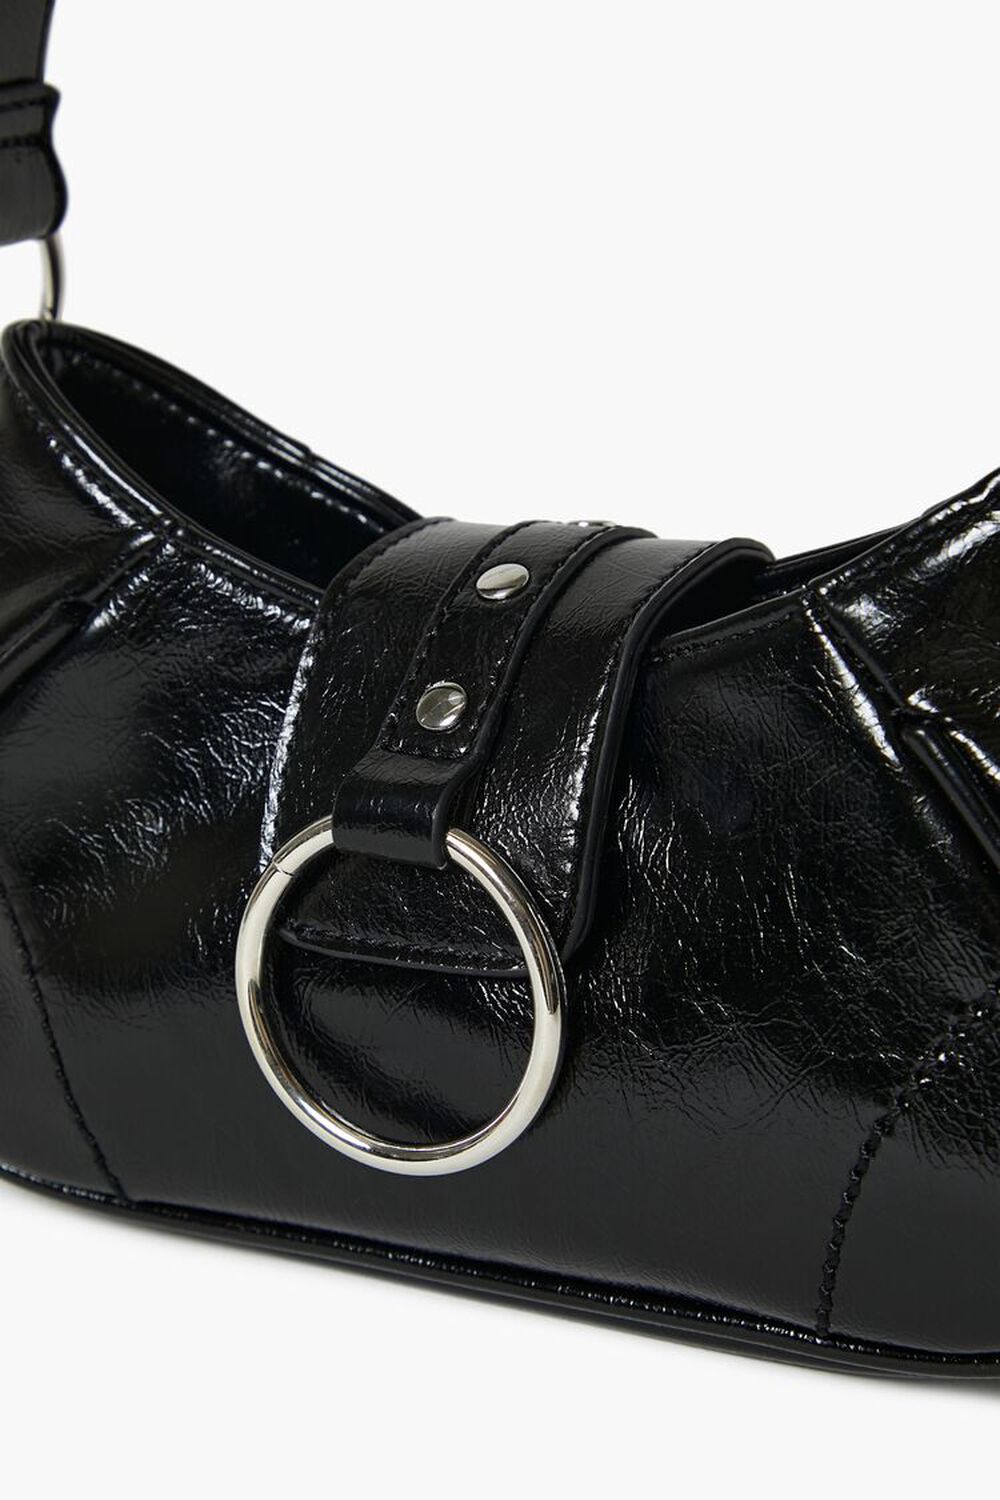 Hello Kitty Cross Black Patent Leather Body Purse, Women's, Size: One Size